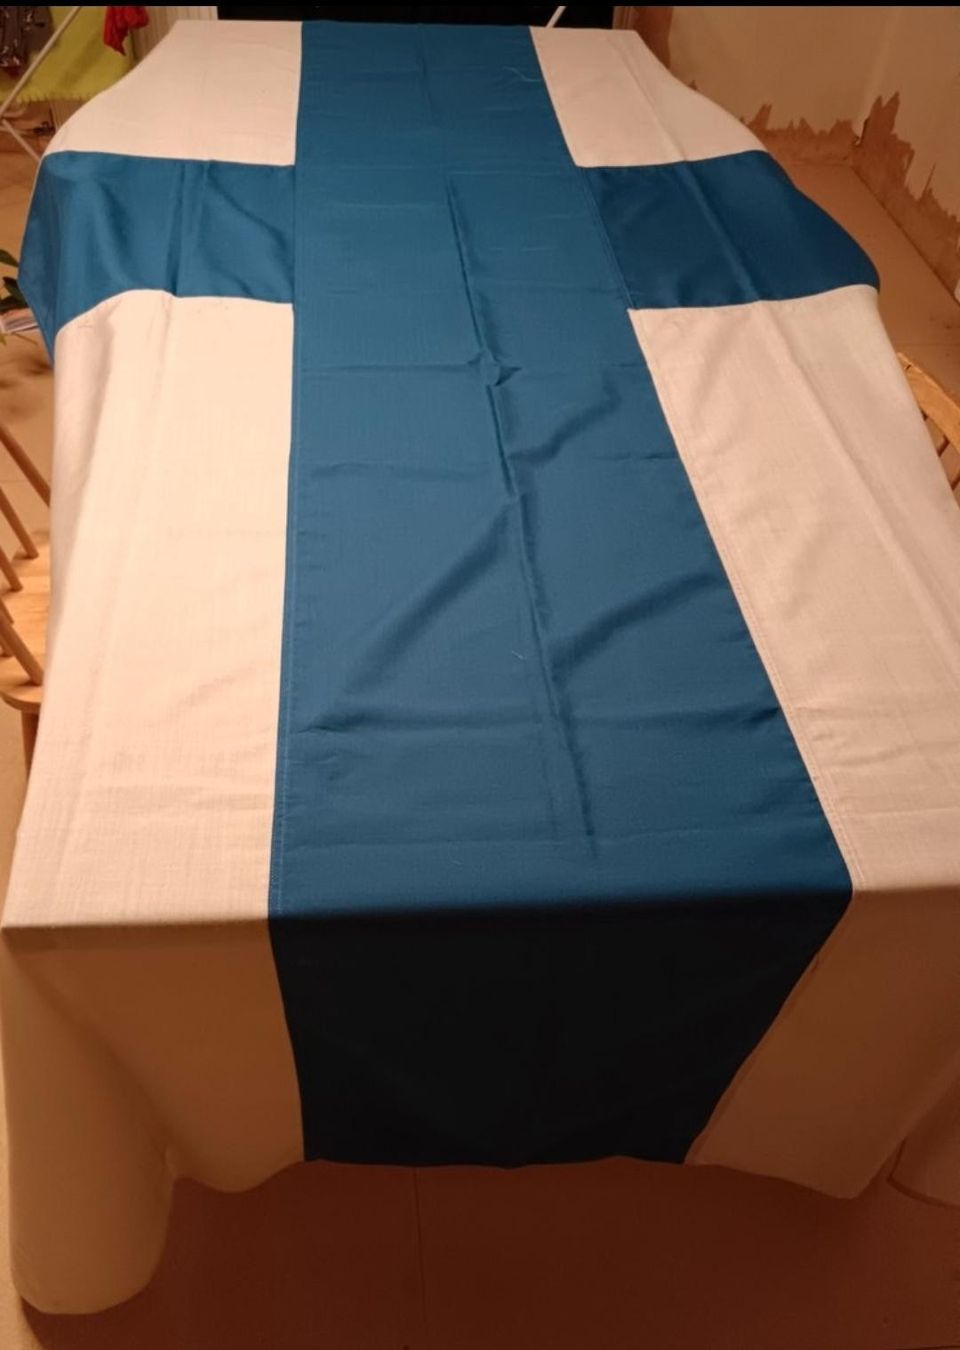 Suomen lippu 11 m lipputankoon